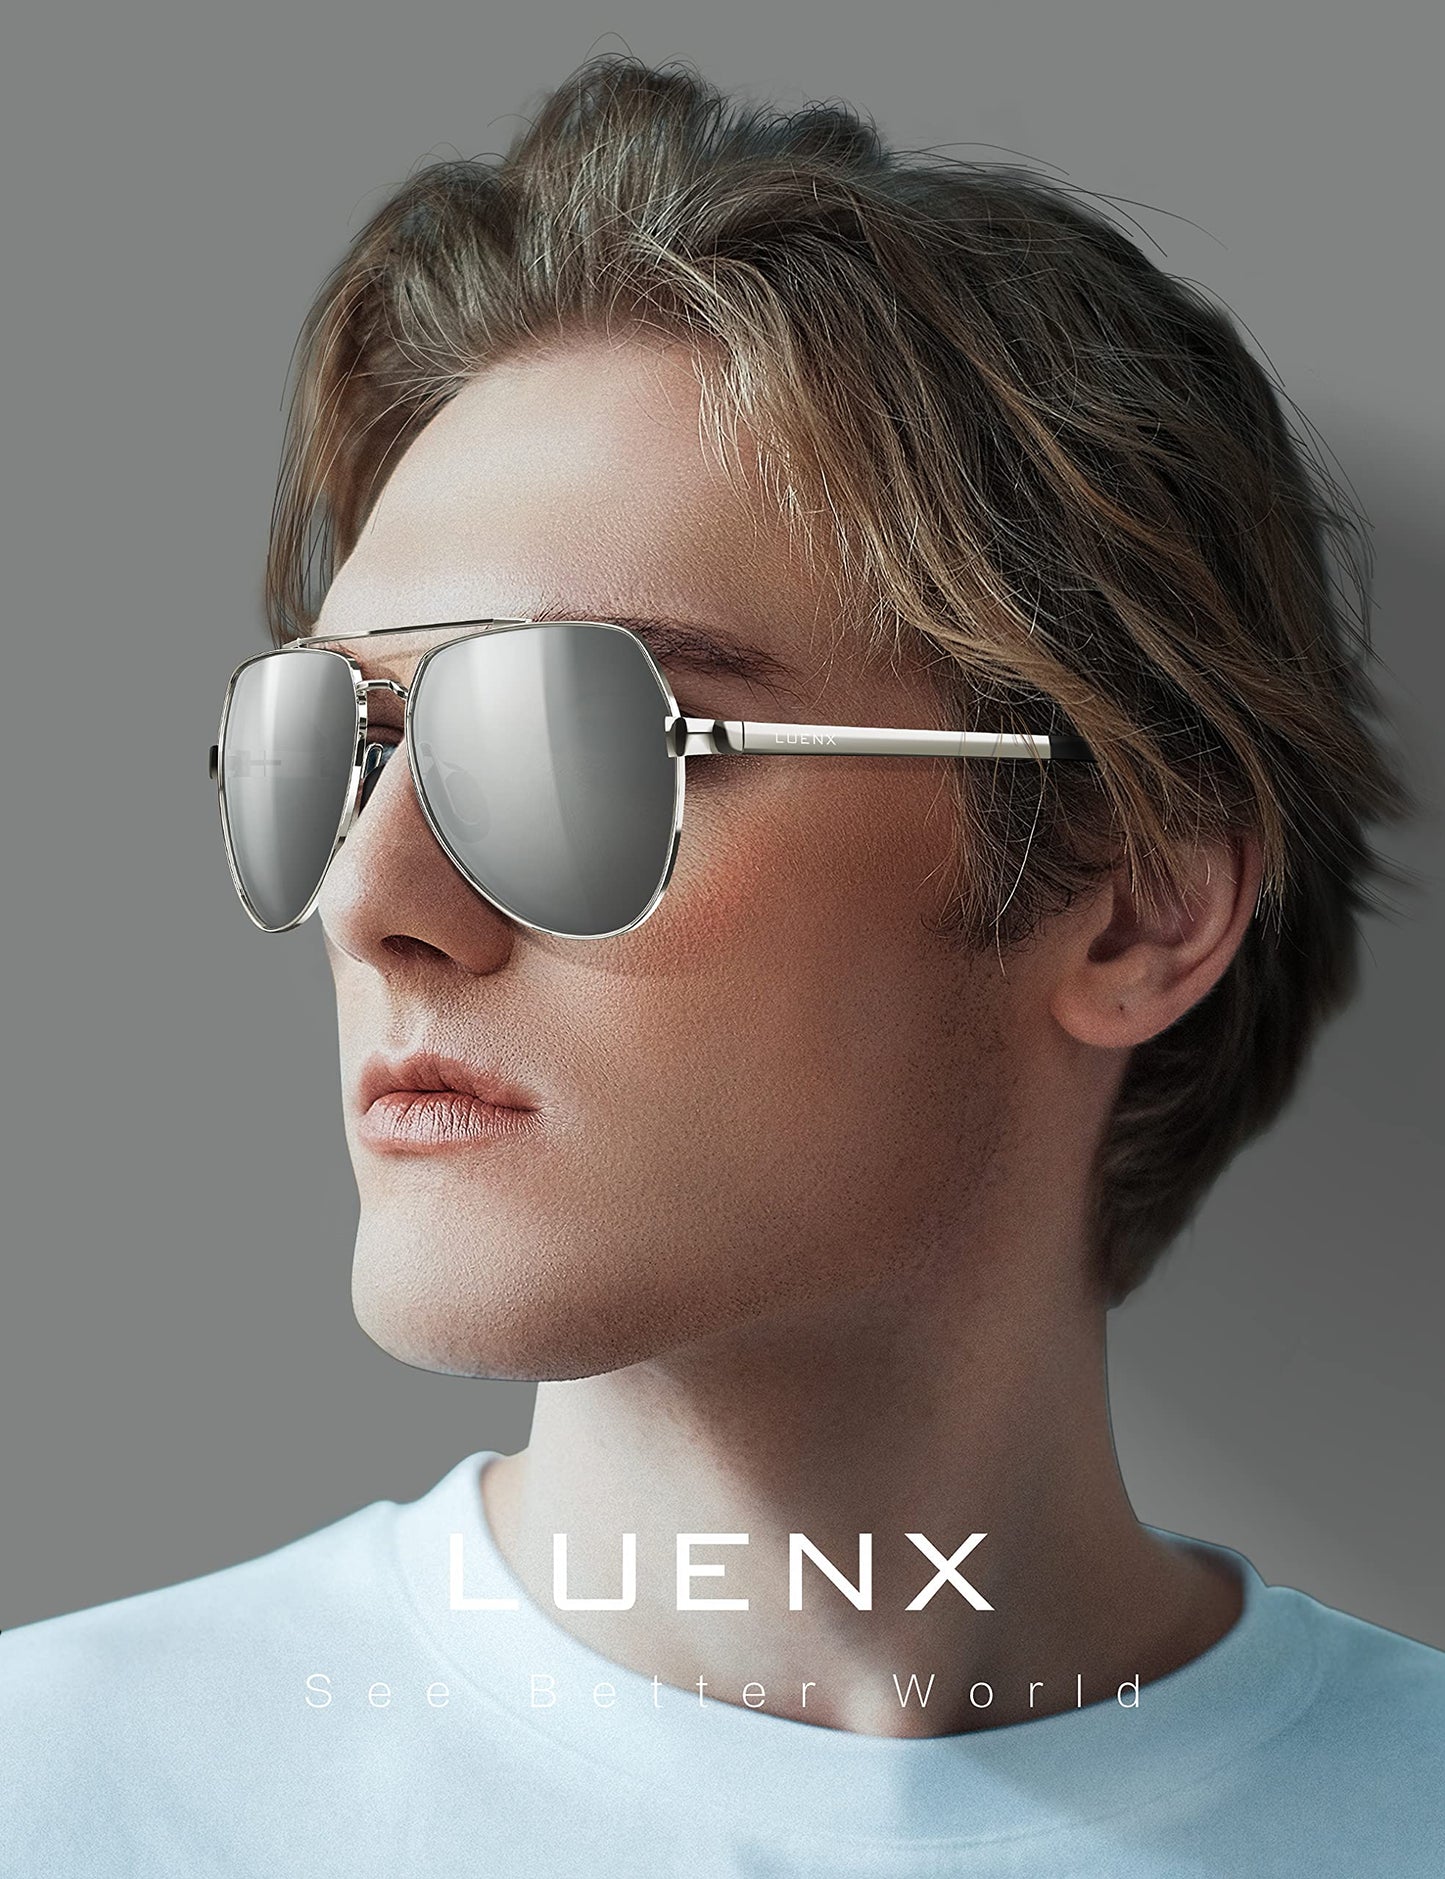 LUENX Aviator Sunglasses for Men Women Polarized New Shades Large Metal Frame - UV 400 Protection